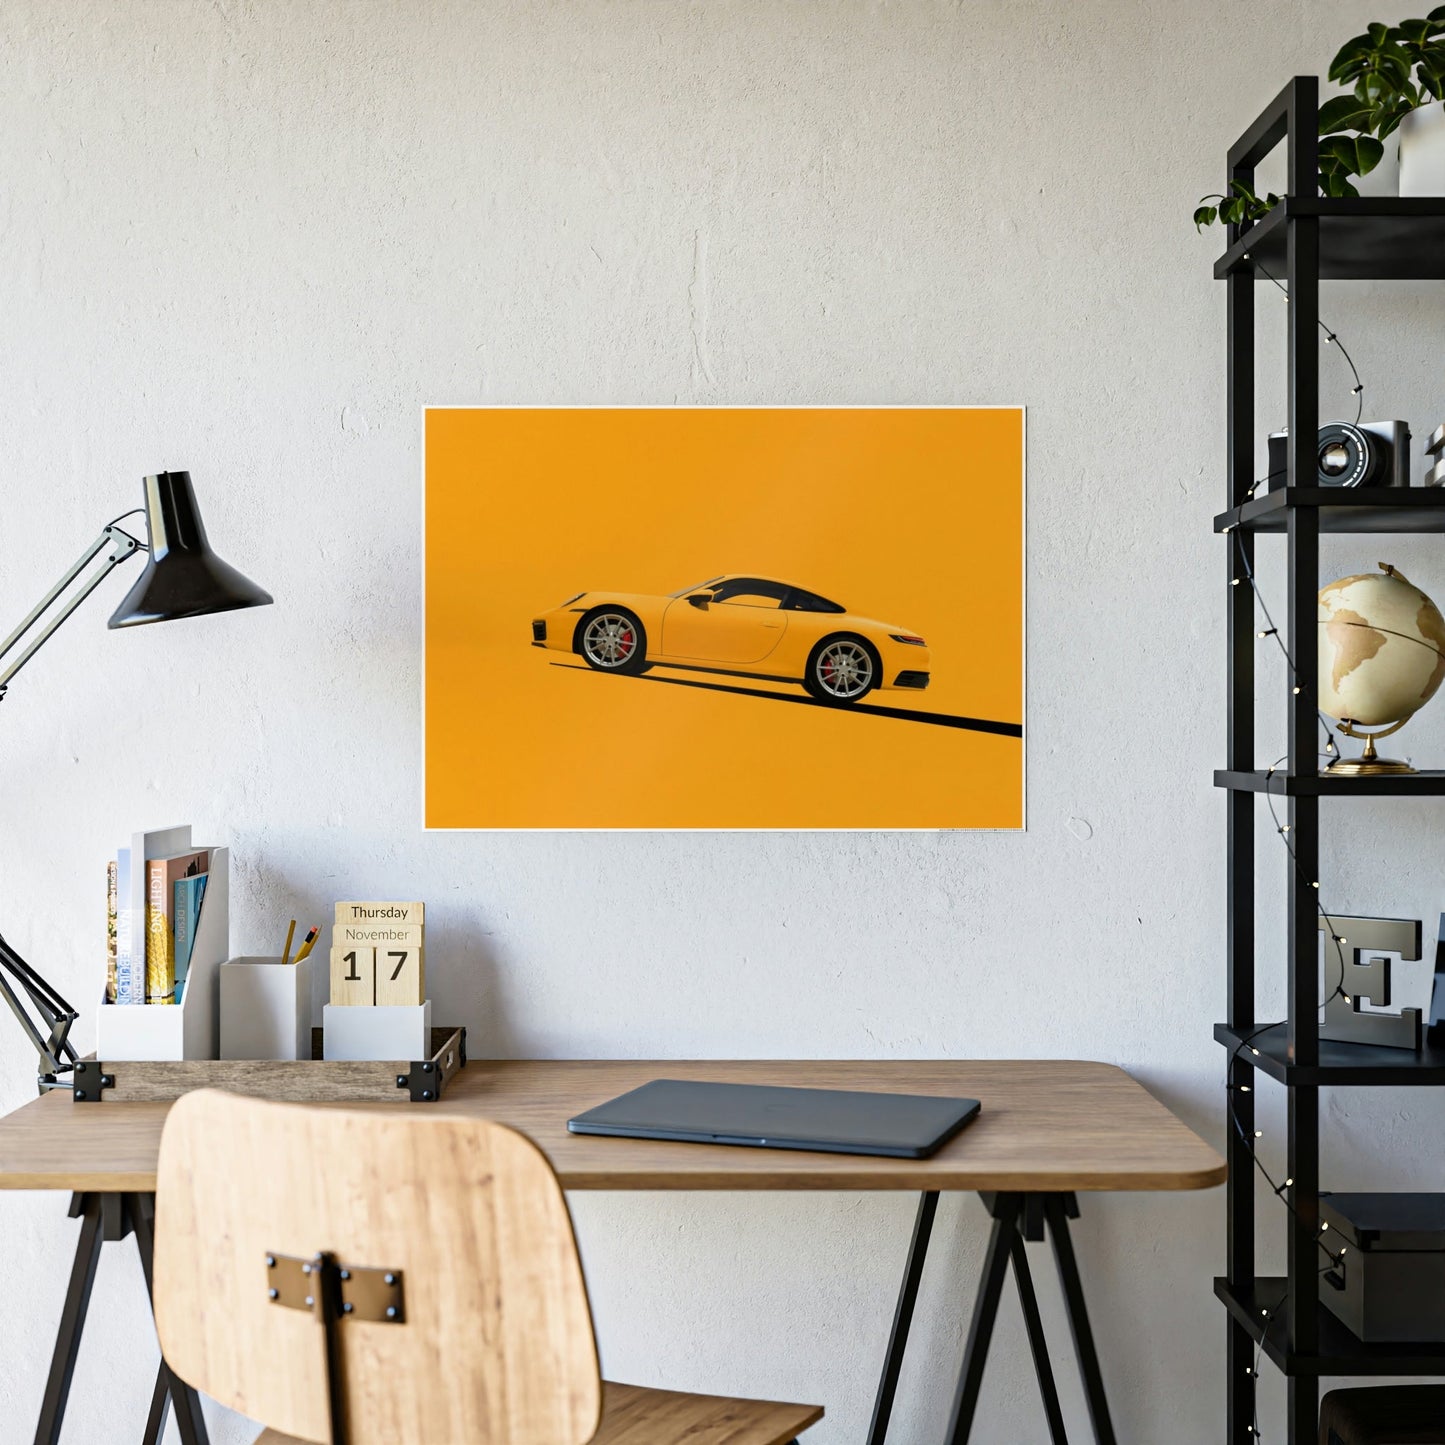 Artistic Porsche: Natural Canvas & Poster Print of a Unique Design